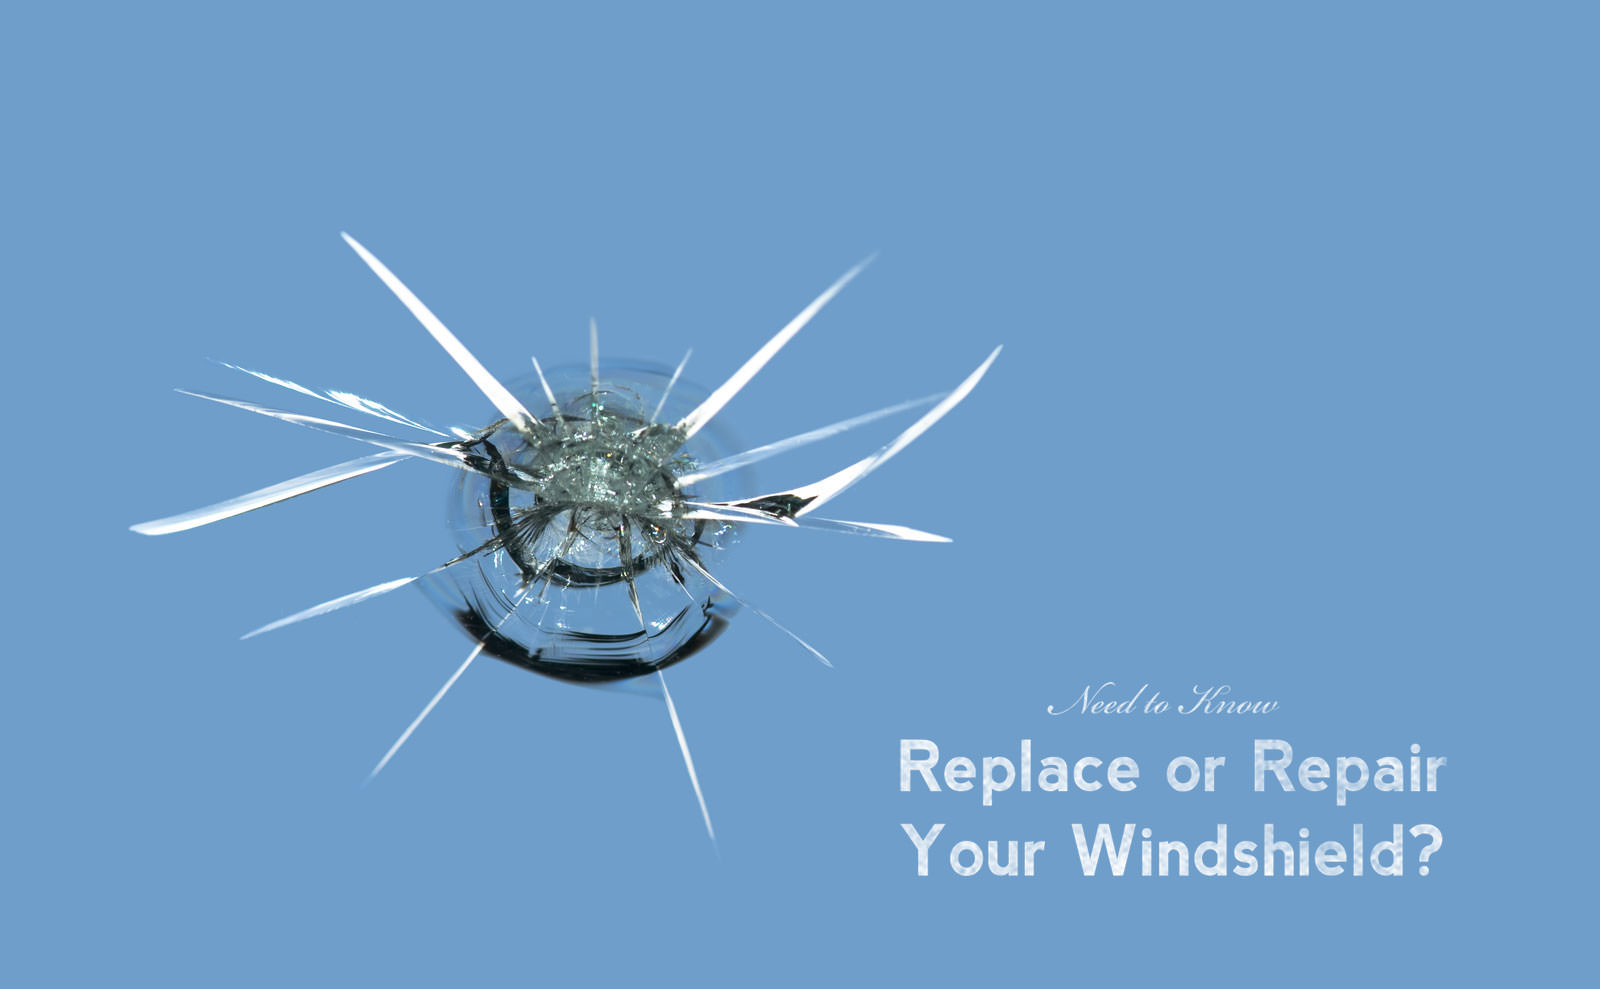 windshield repair replace